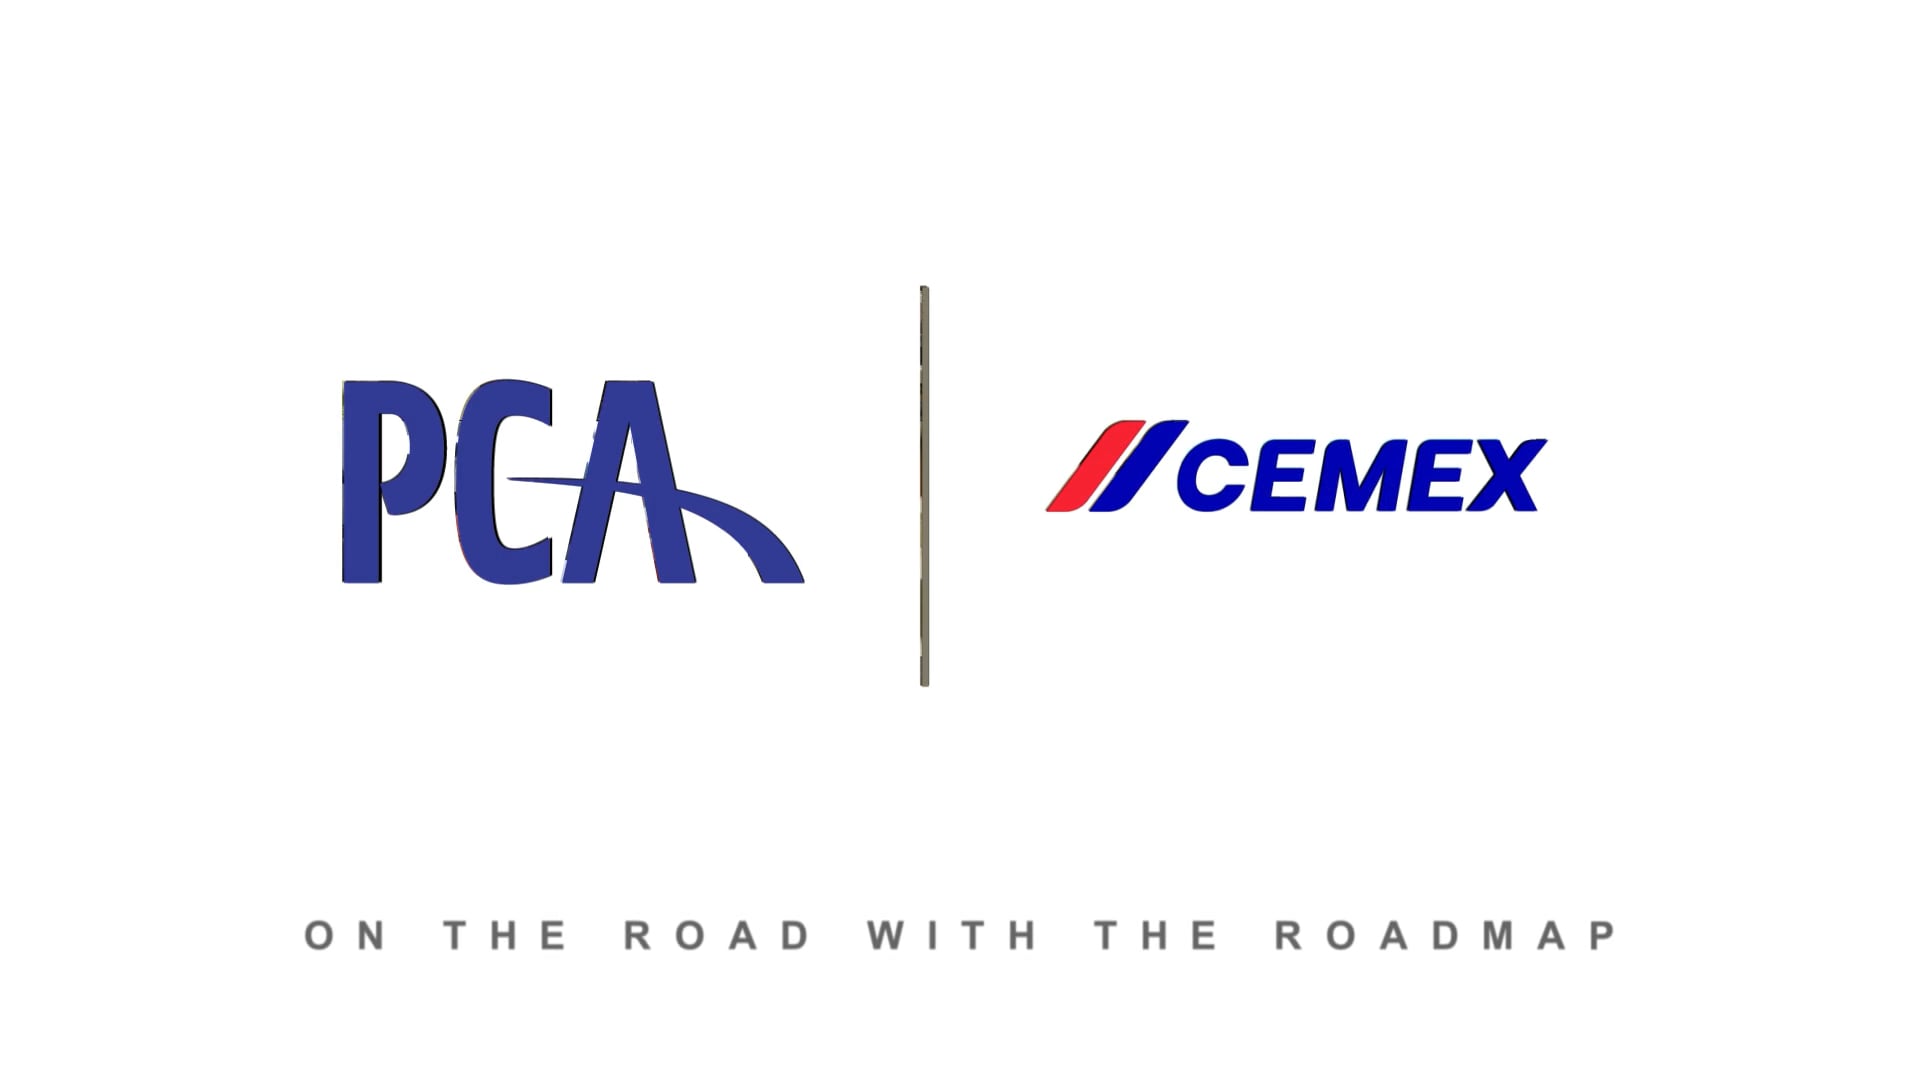 Cemex: Corporate Culture